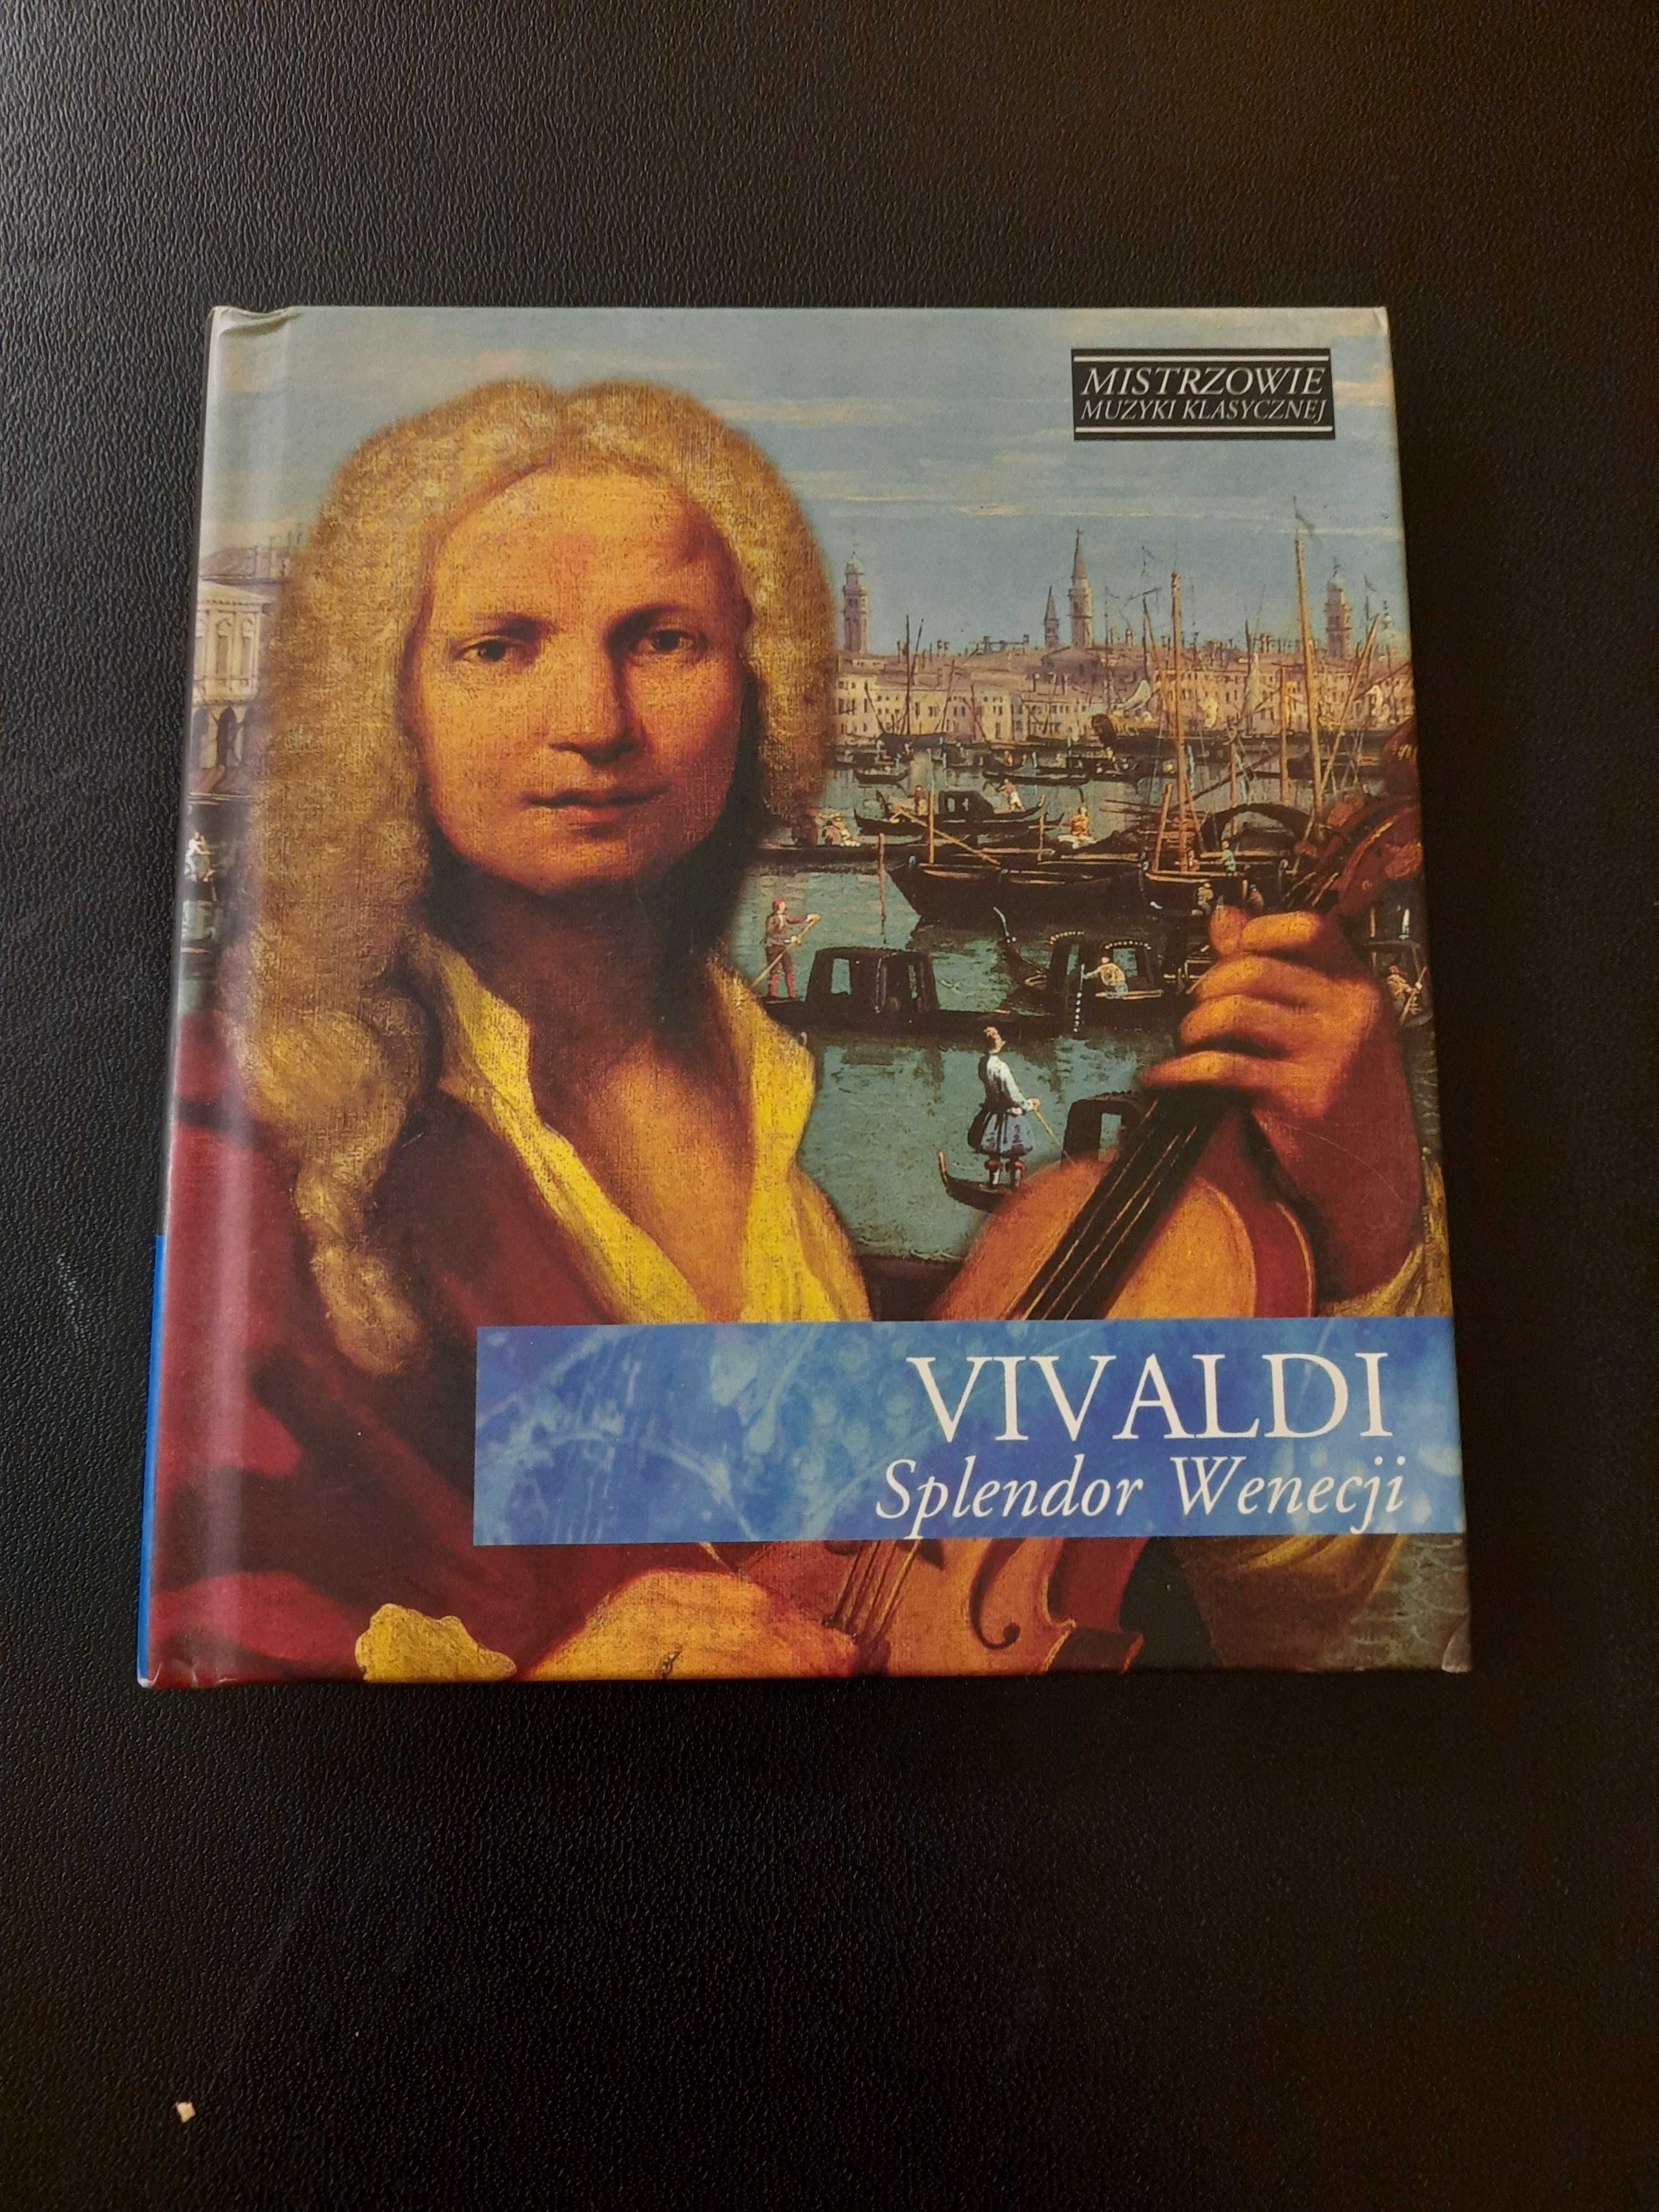 "Vivaldi - Splendor Wenecji"